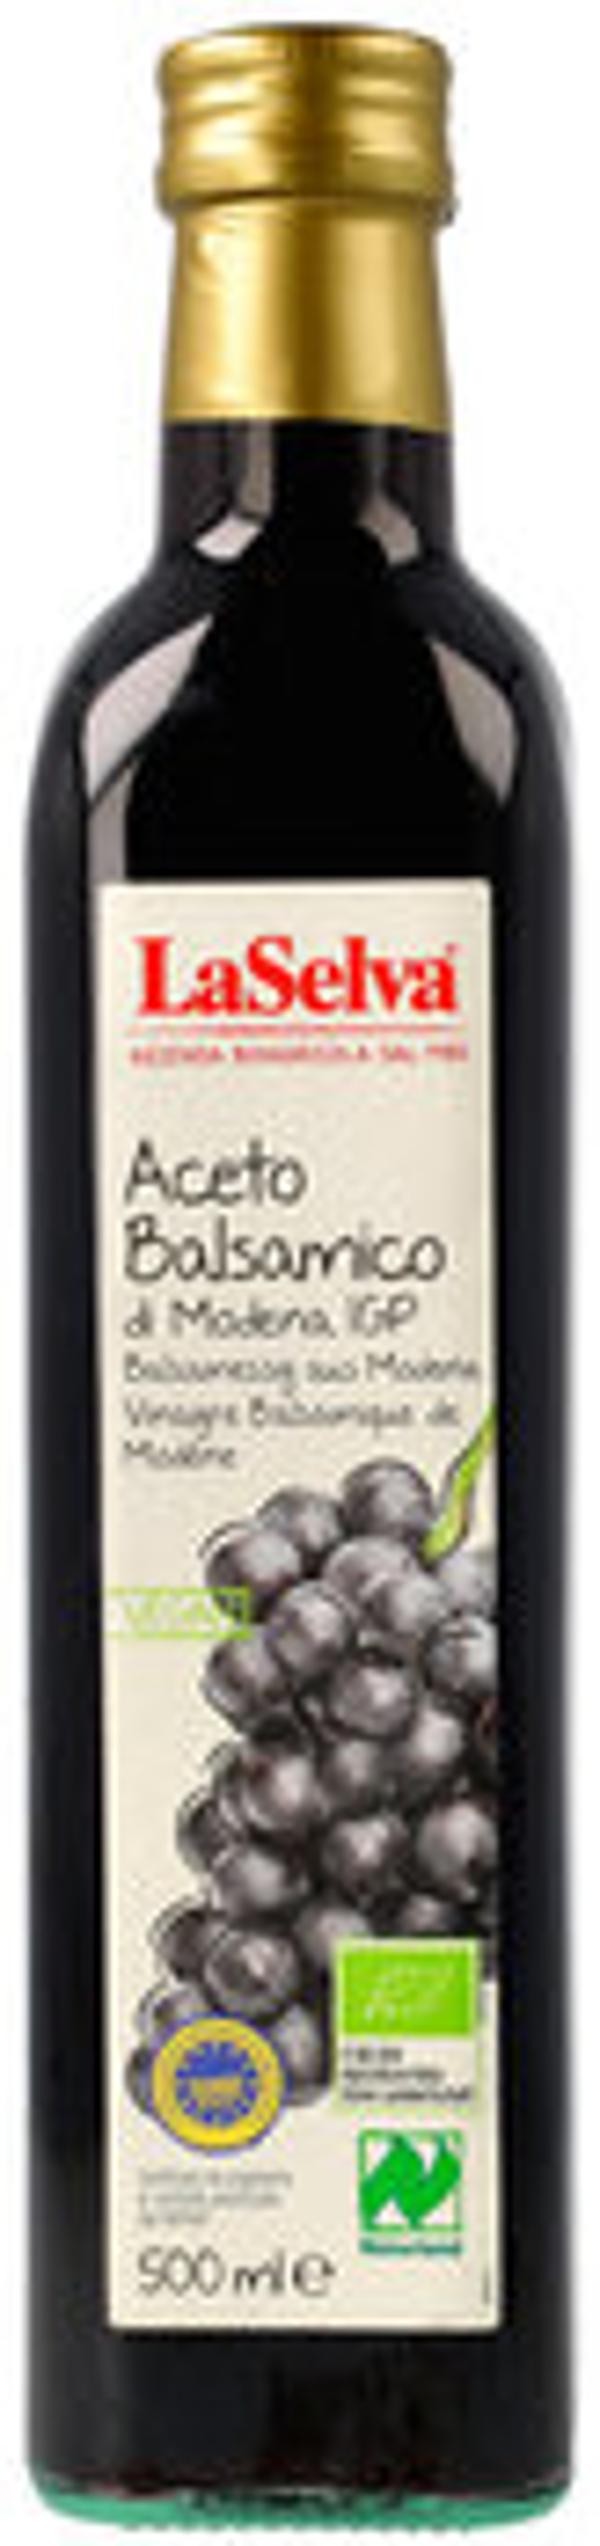 Produktfoto zu Aceto Balsamico di Modena IGP